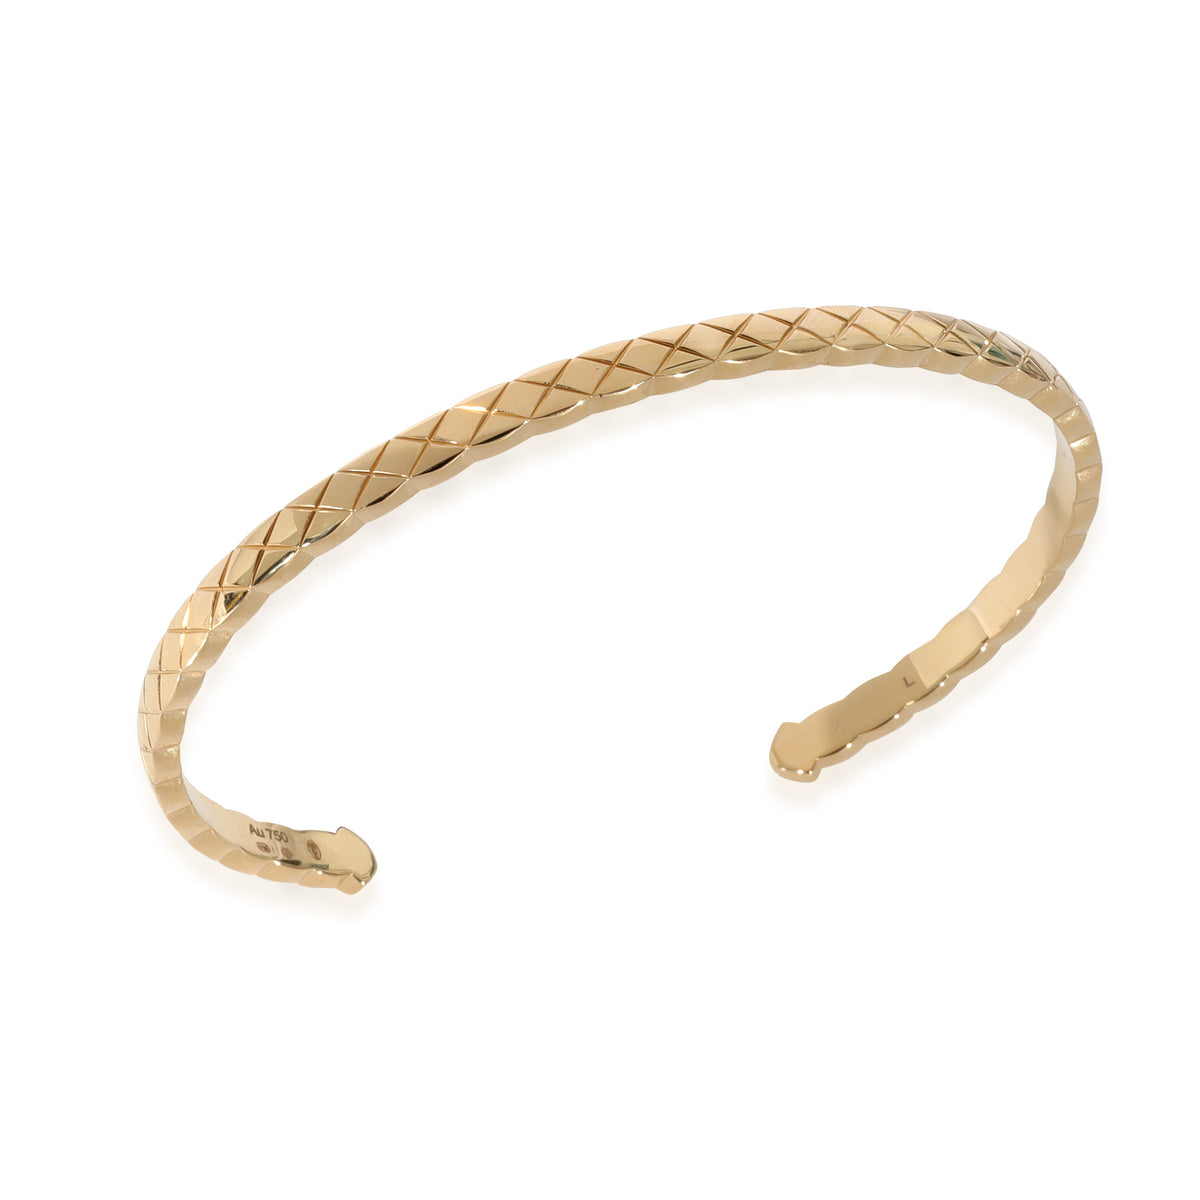 Chanel Coco Crush Bracelet in 18k Yellow Gold